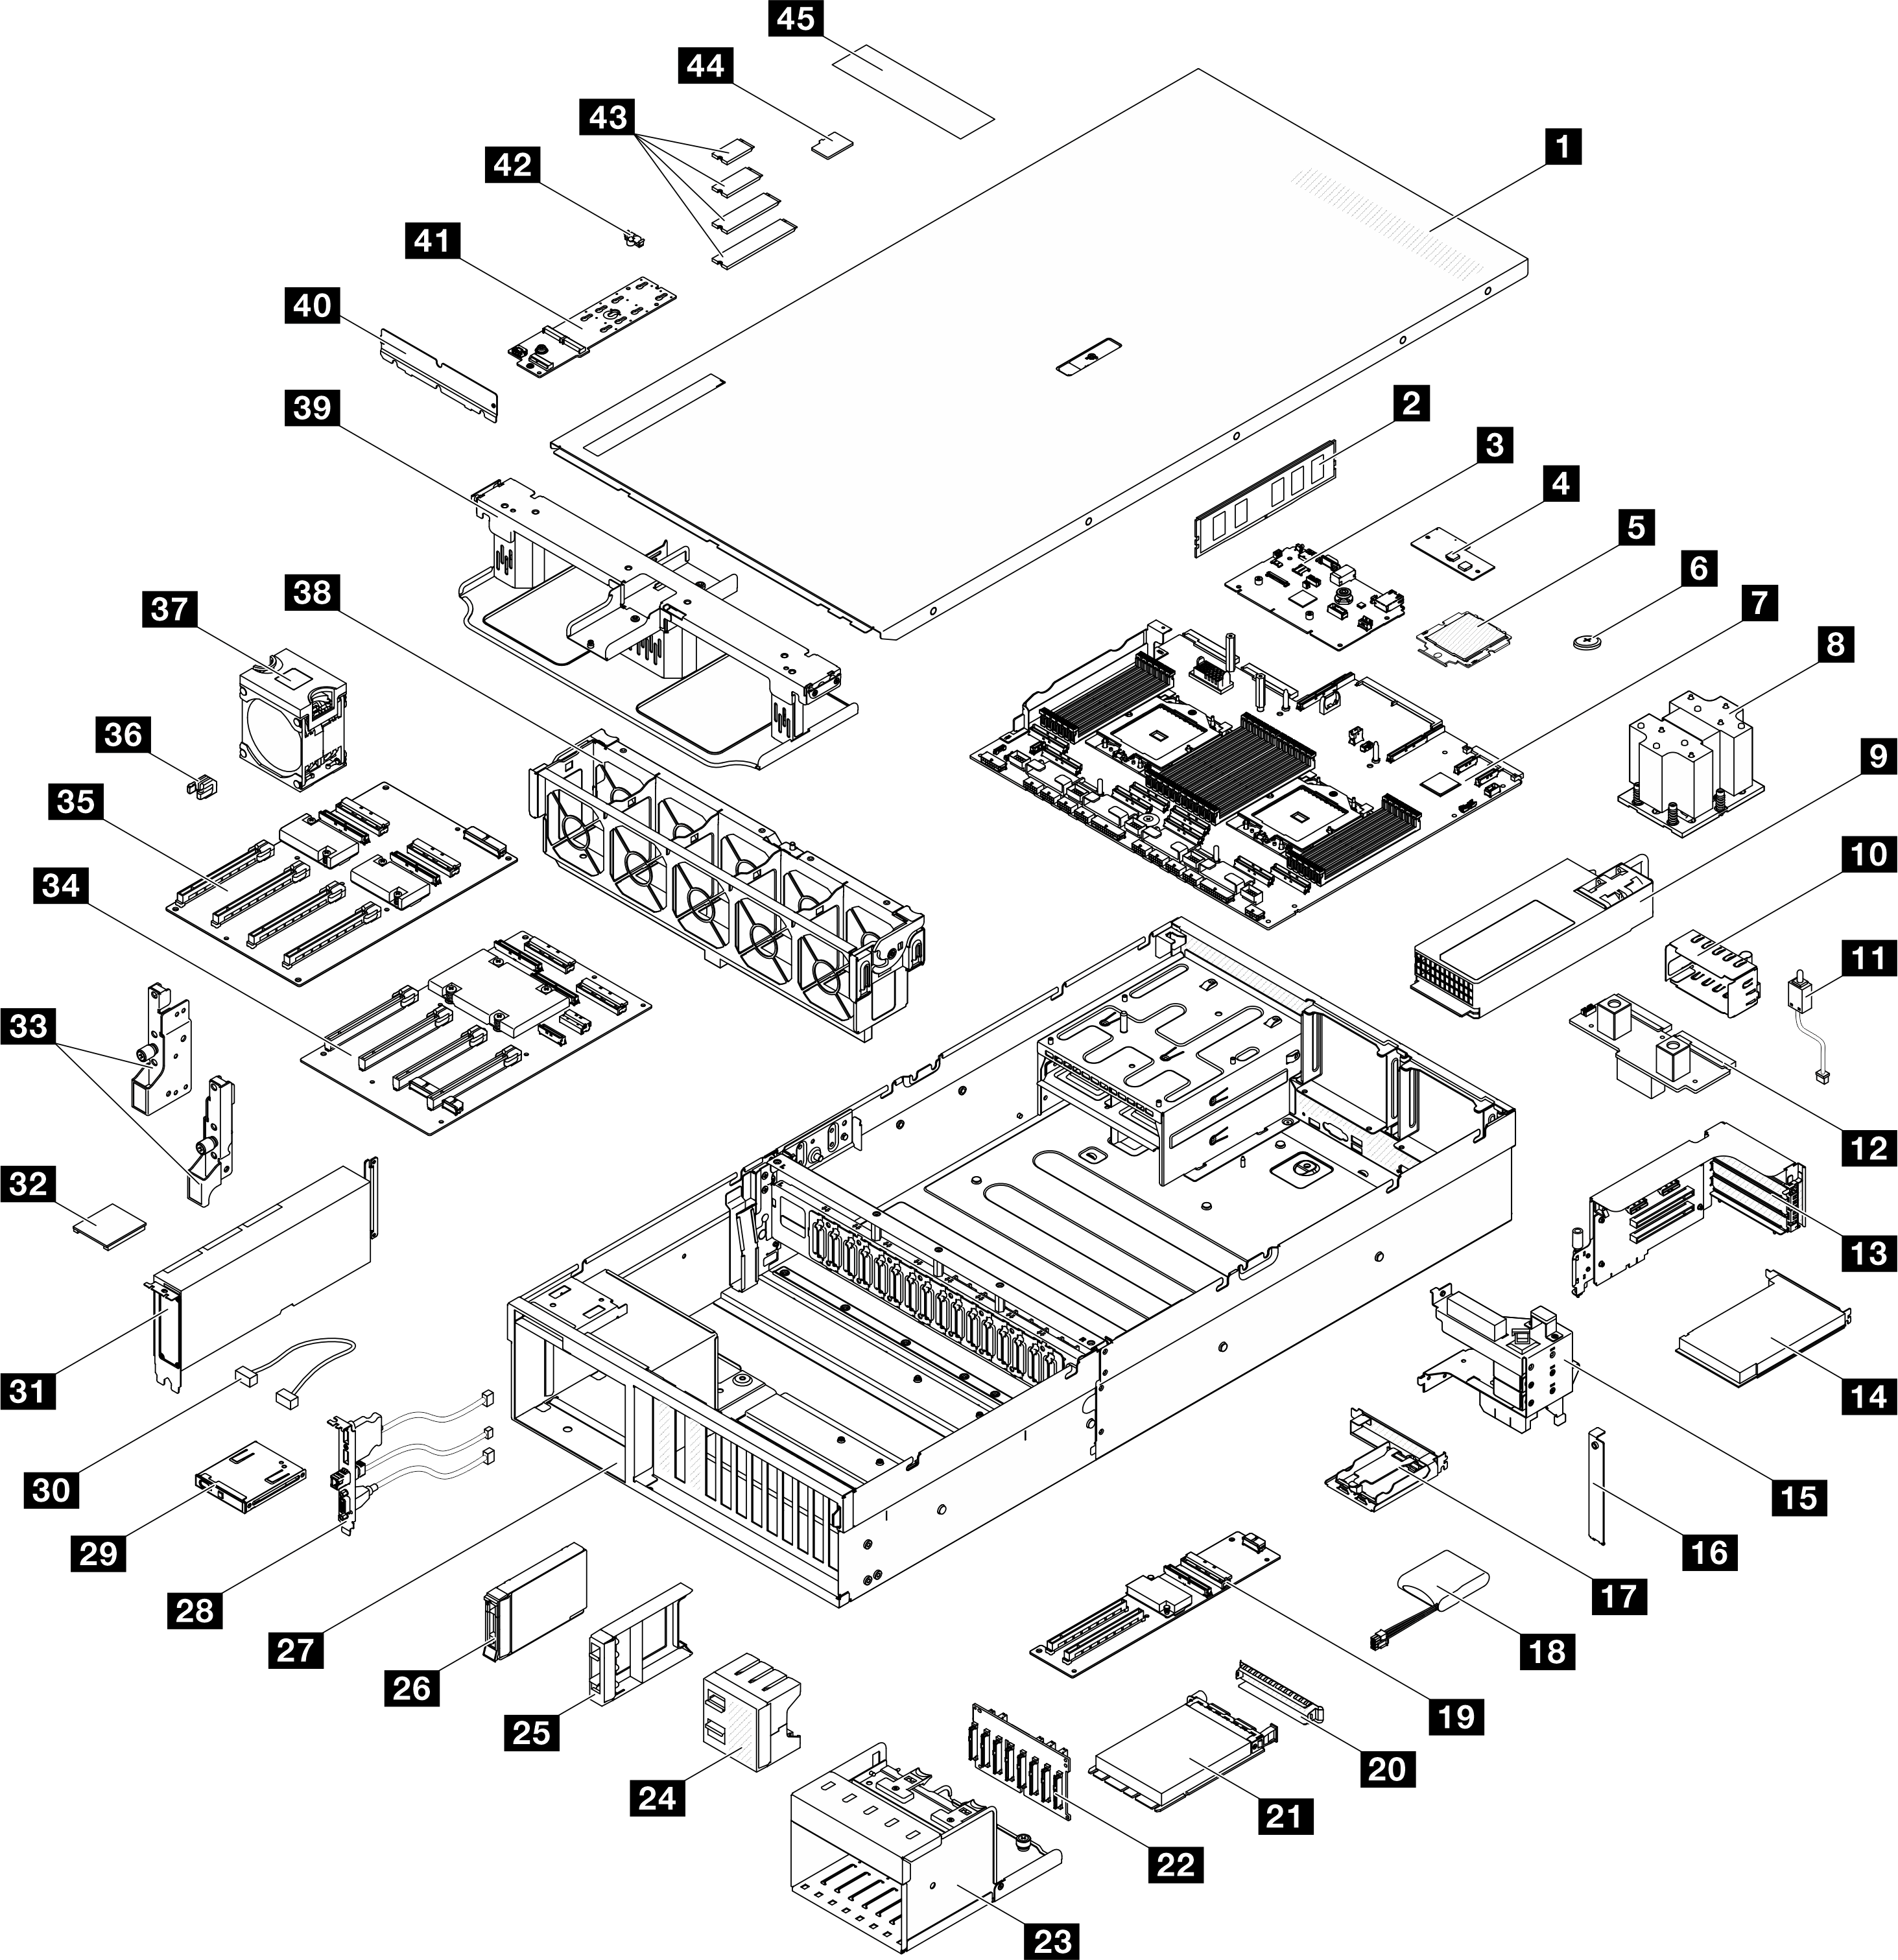 Server components of the 4-DW GPU 型號